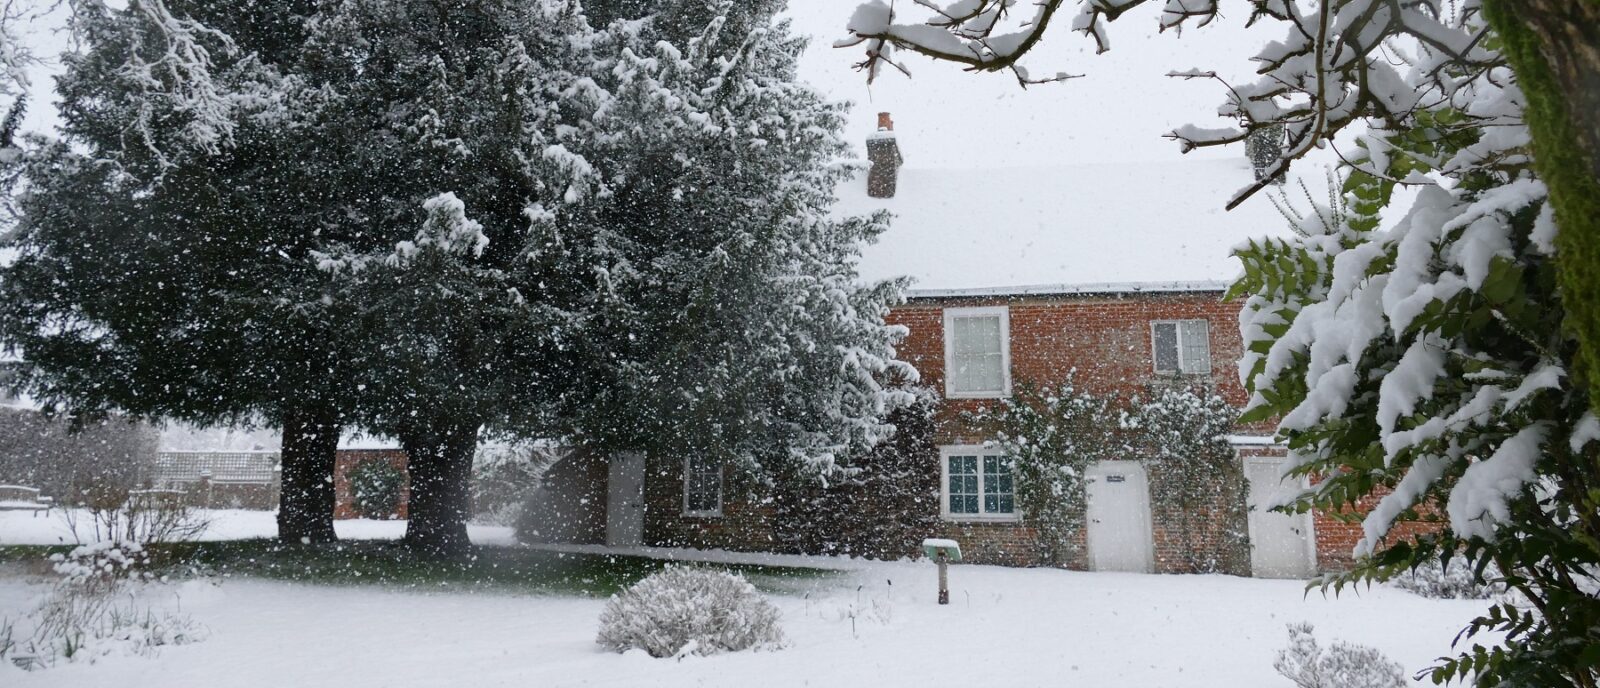 Jane Austen's House in the snow